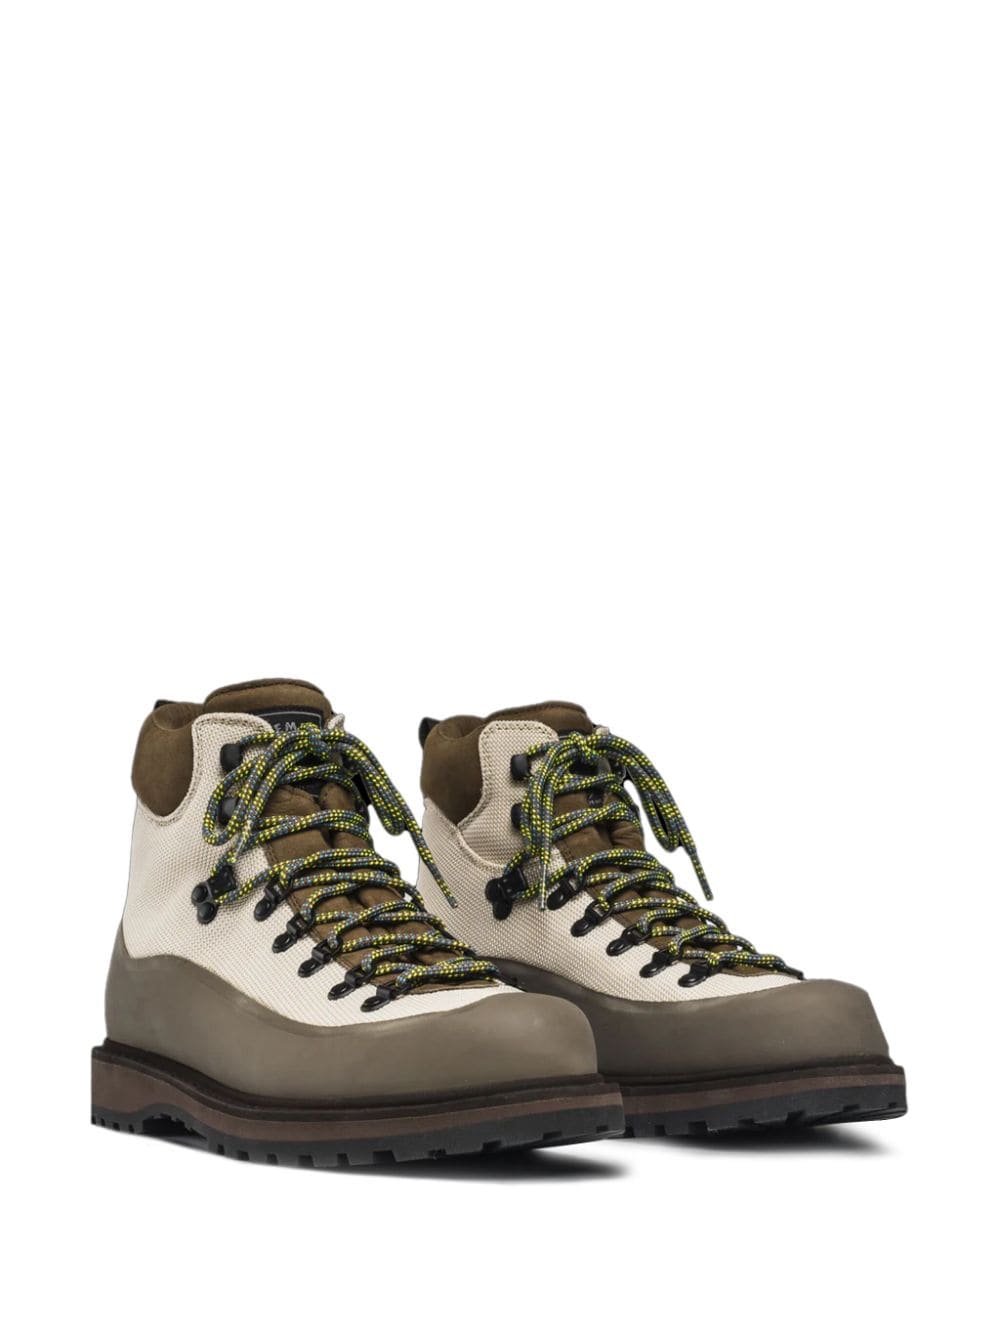 Diemme Roccia Vet canvas hiking boots - Groen